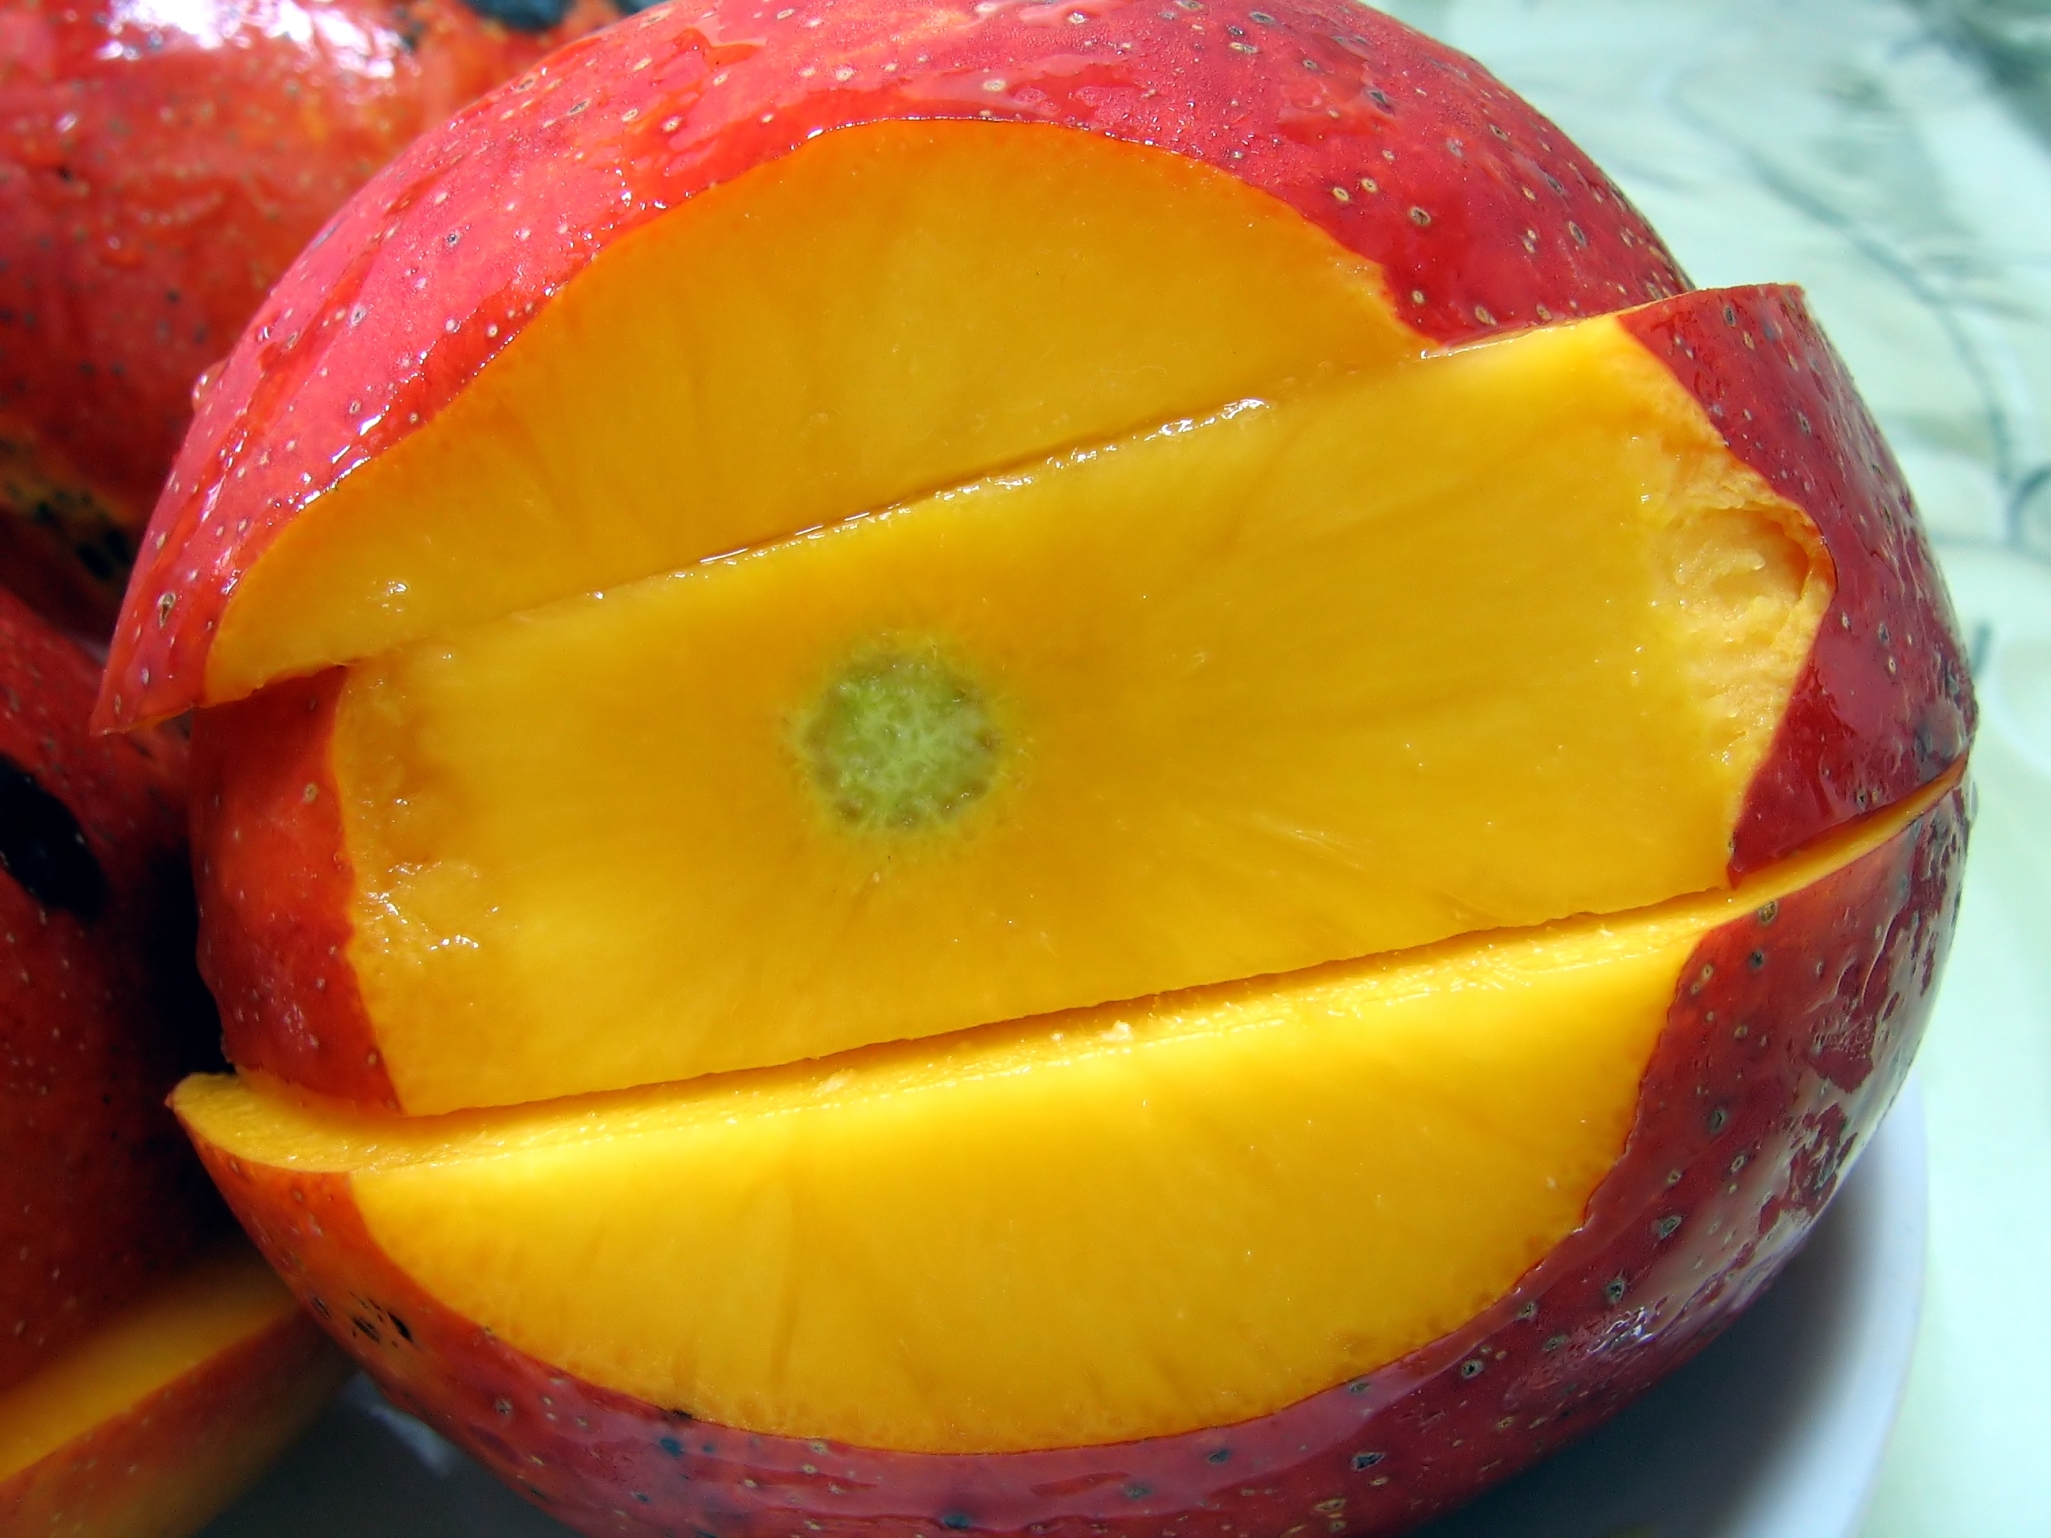 Juicy red mango photo